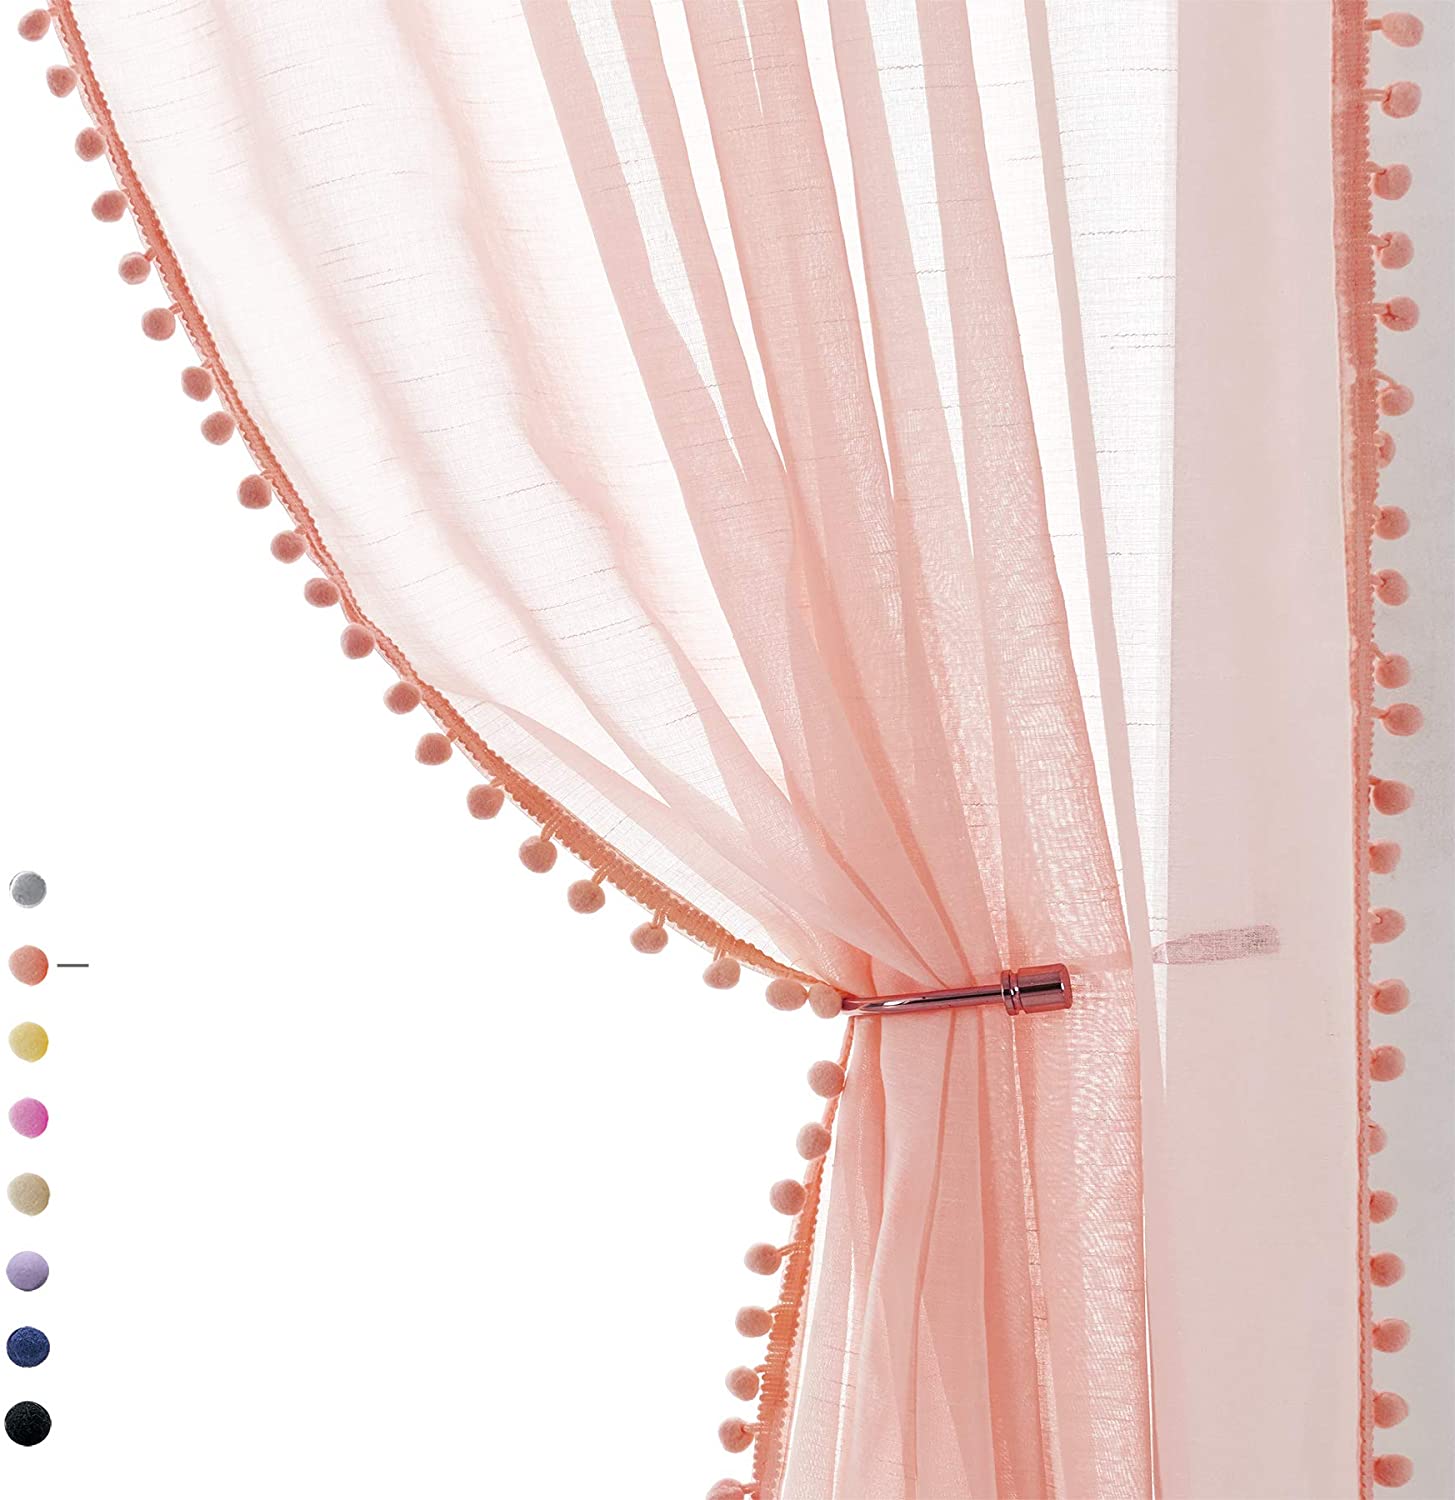 5. TREATMENTEX Pom-Pom Sheer Curtains for Girl's Bedroom Closet Curtains